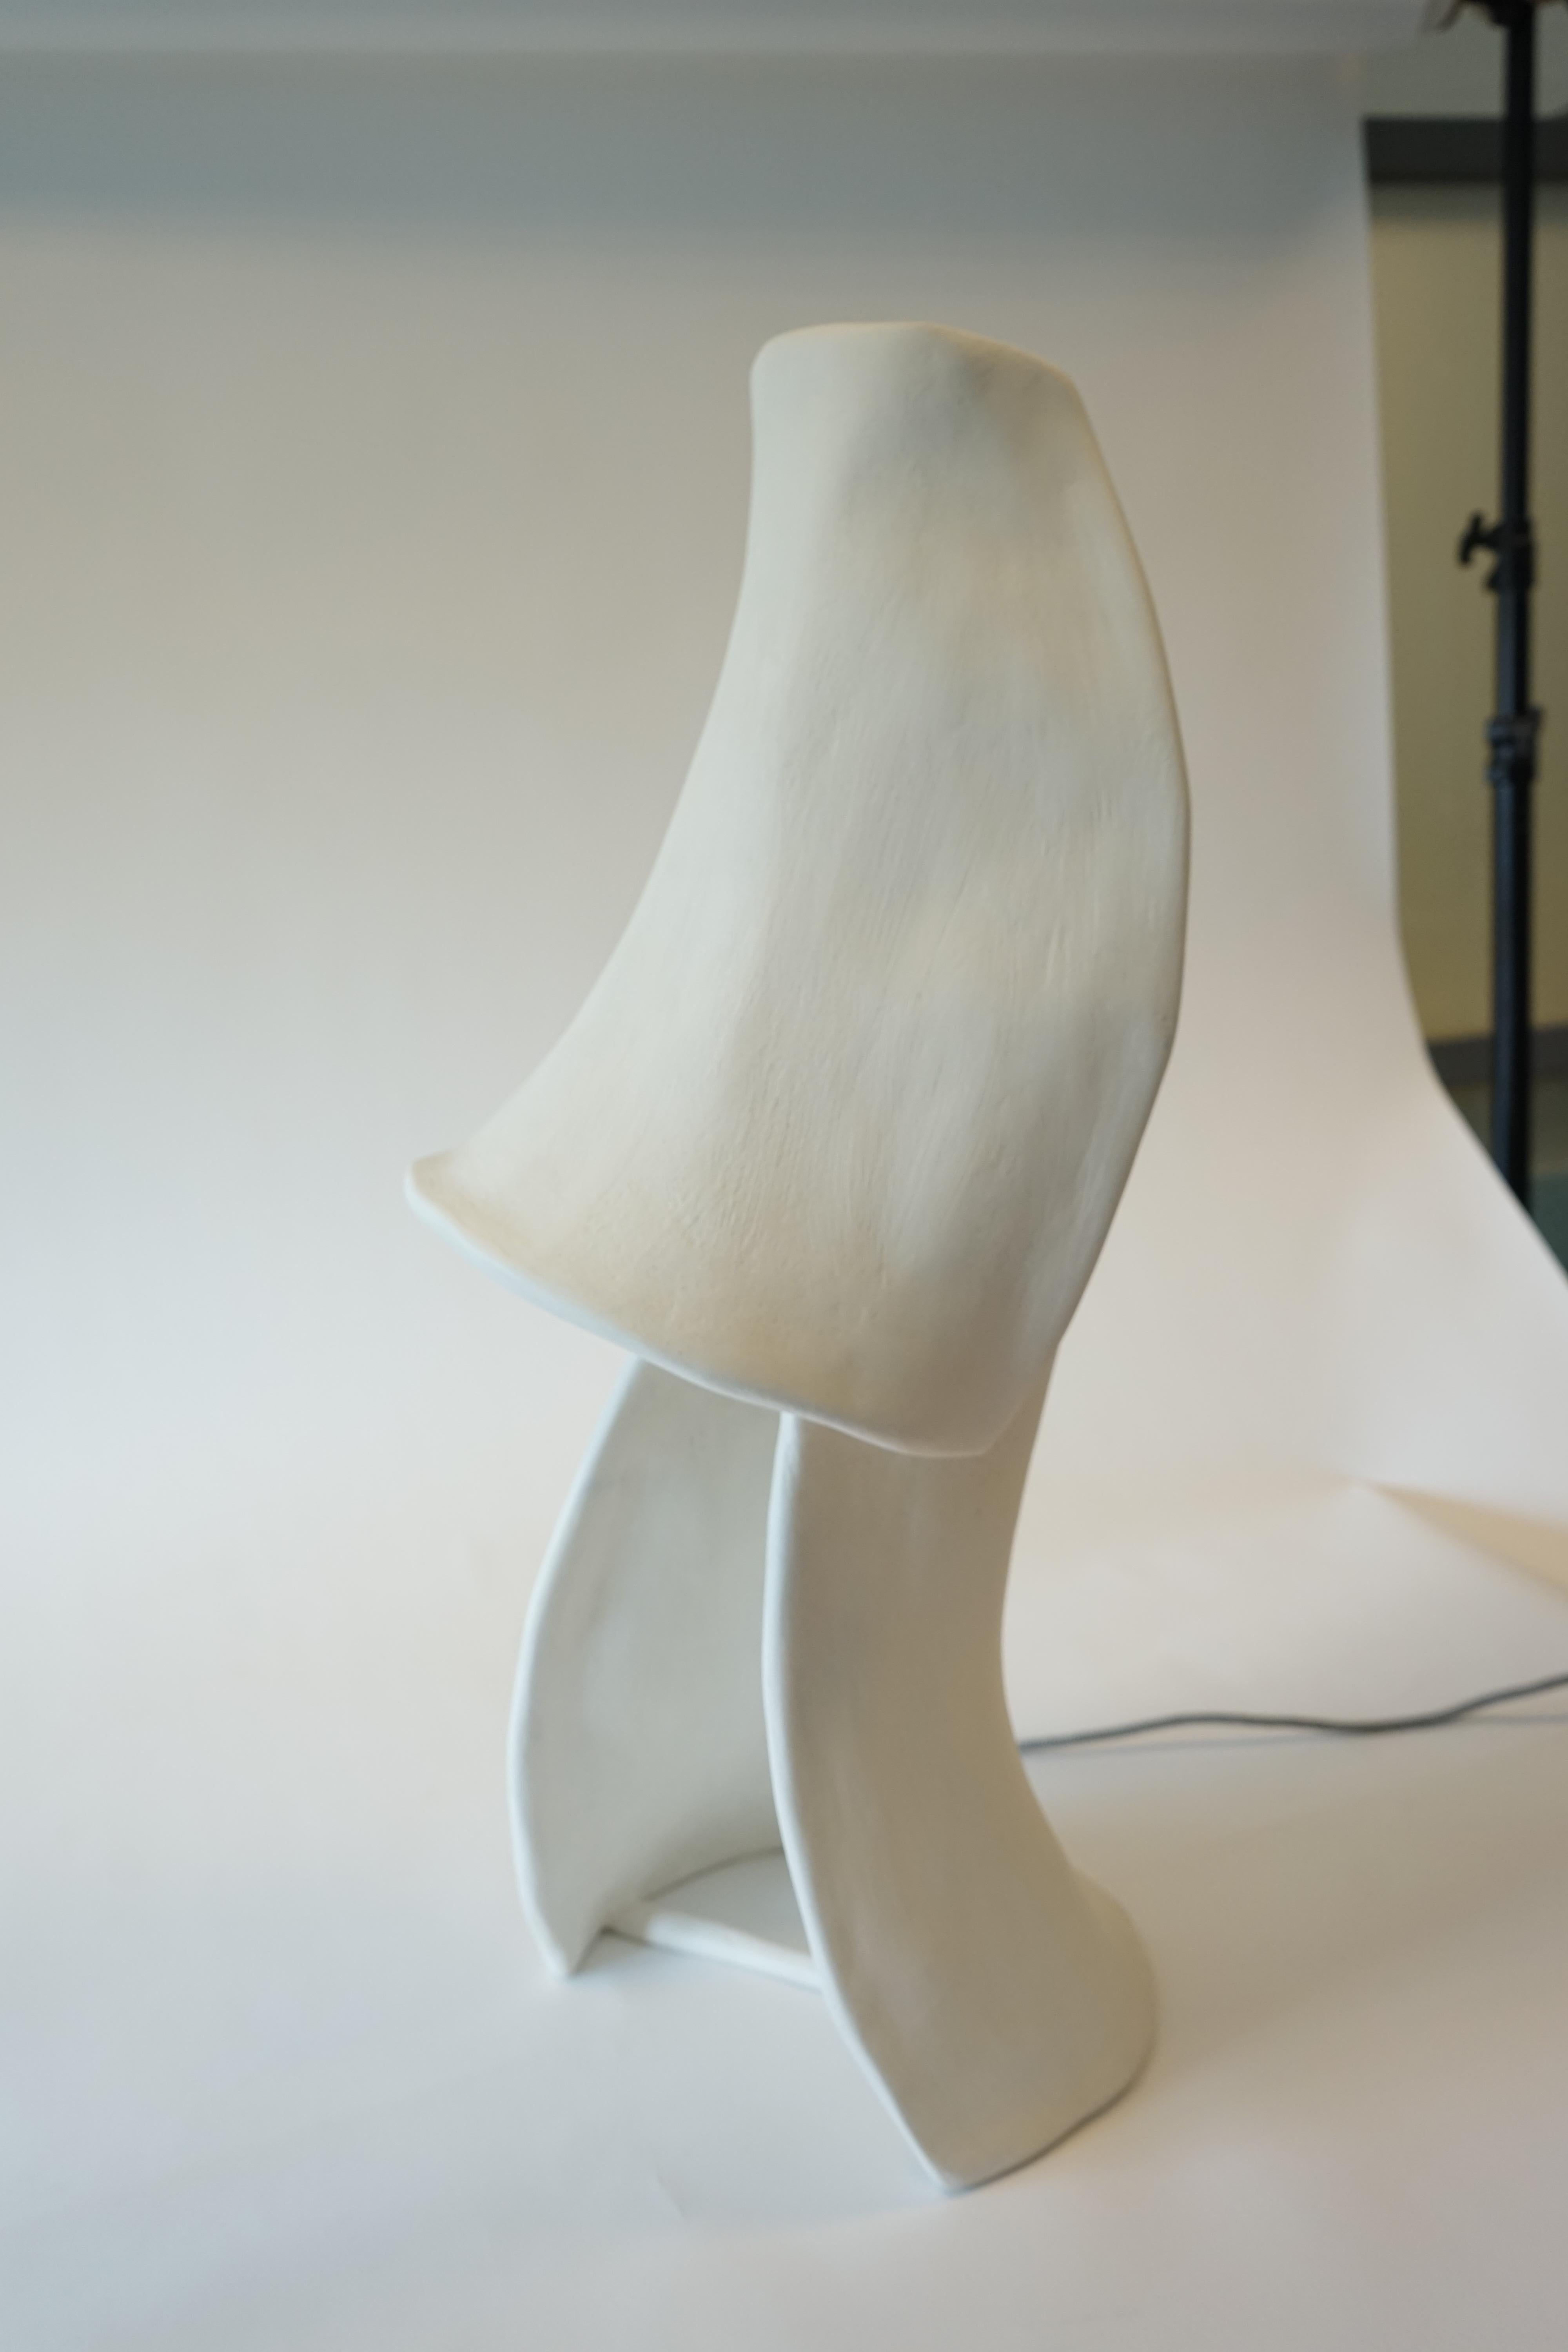 Cement Contemporary Design White Textured Curved Sculptures Lamp by Jordan van der Ven For Sale